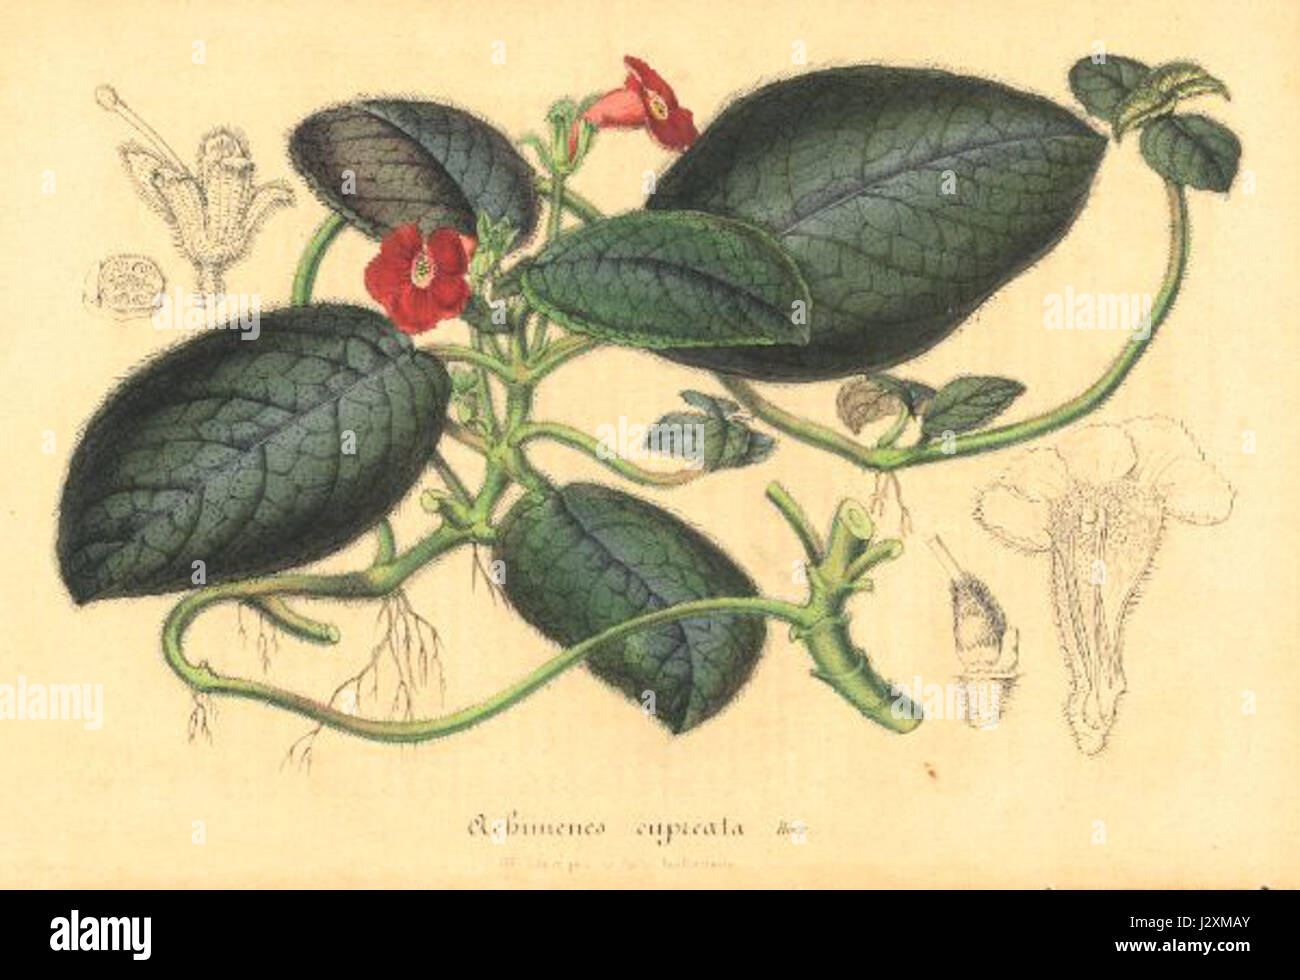 Achimenes cupreata van houtte 1847 Stock Photo